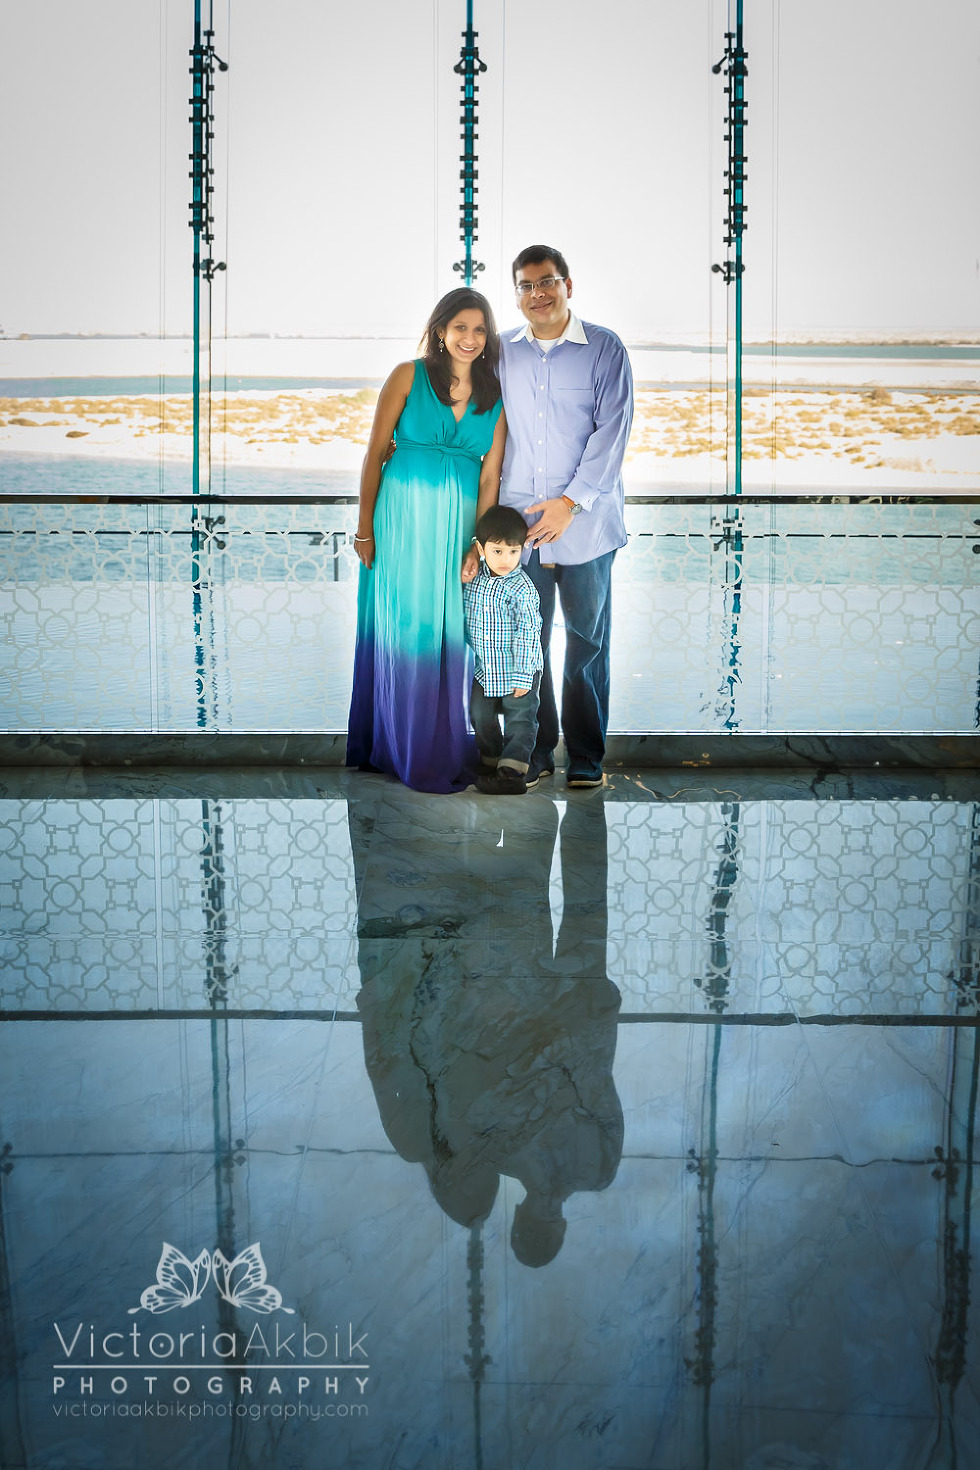 Mrs R’s Family Photo Shoot | Abu Dhabi Lifestyle Family Photography » Victoria Akbik Photography